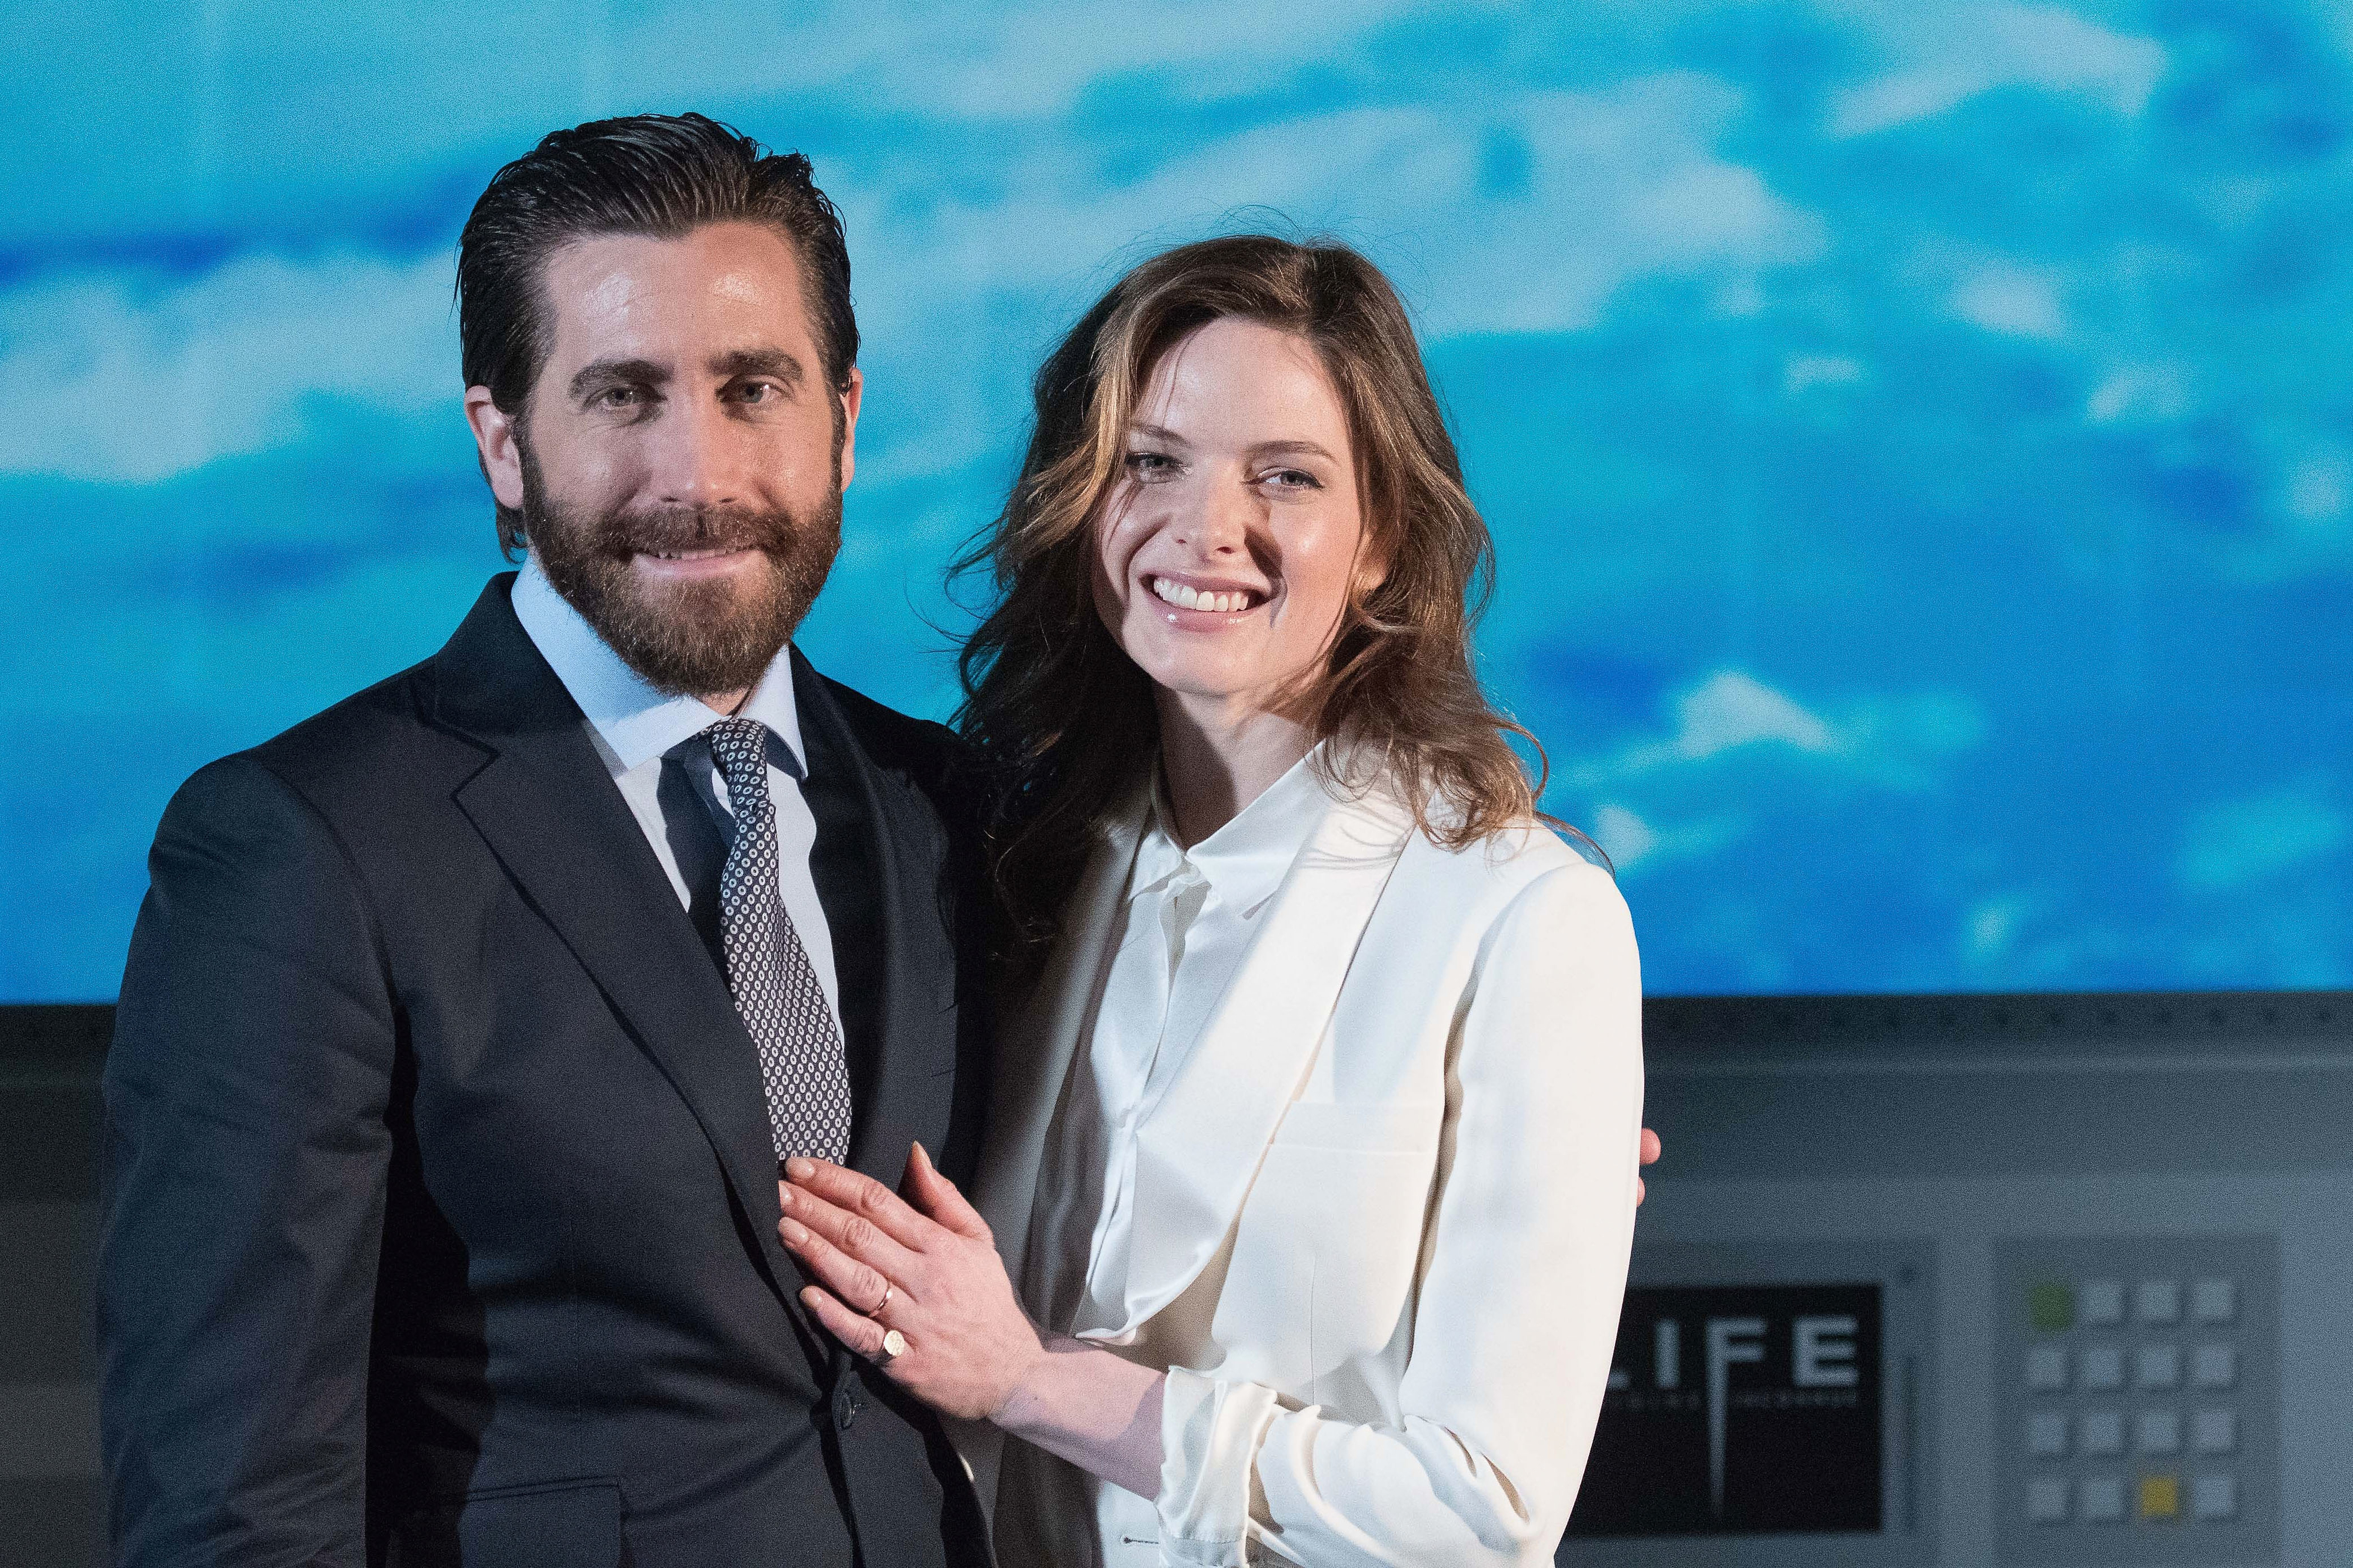 Jake Gyllenhaal and Rebecca Ferguson smiling, posing in semiformal attire for an event